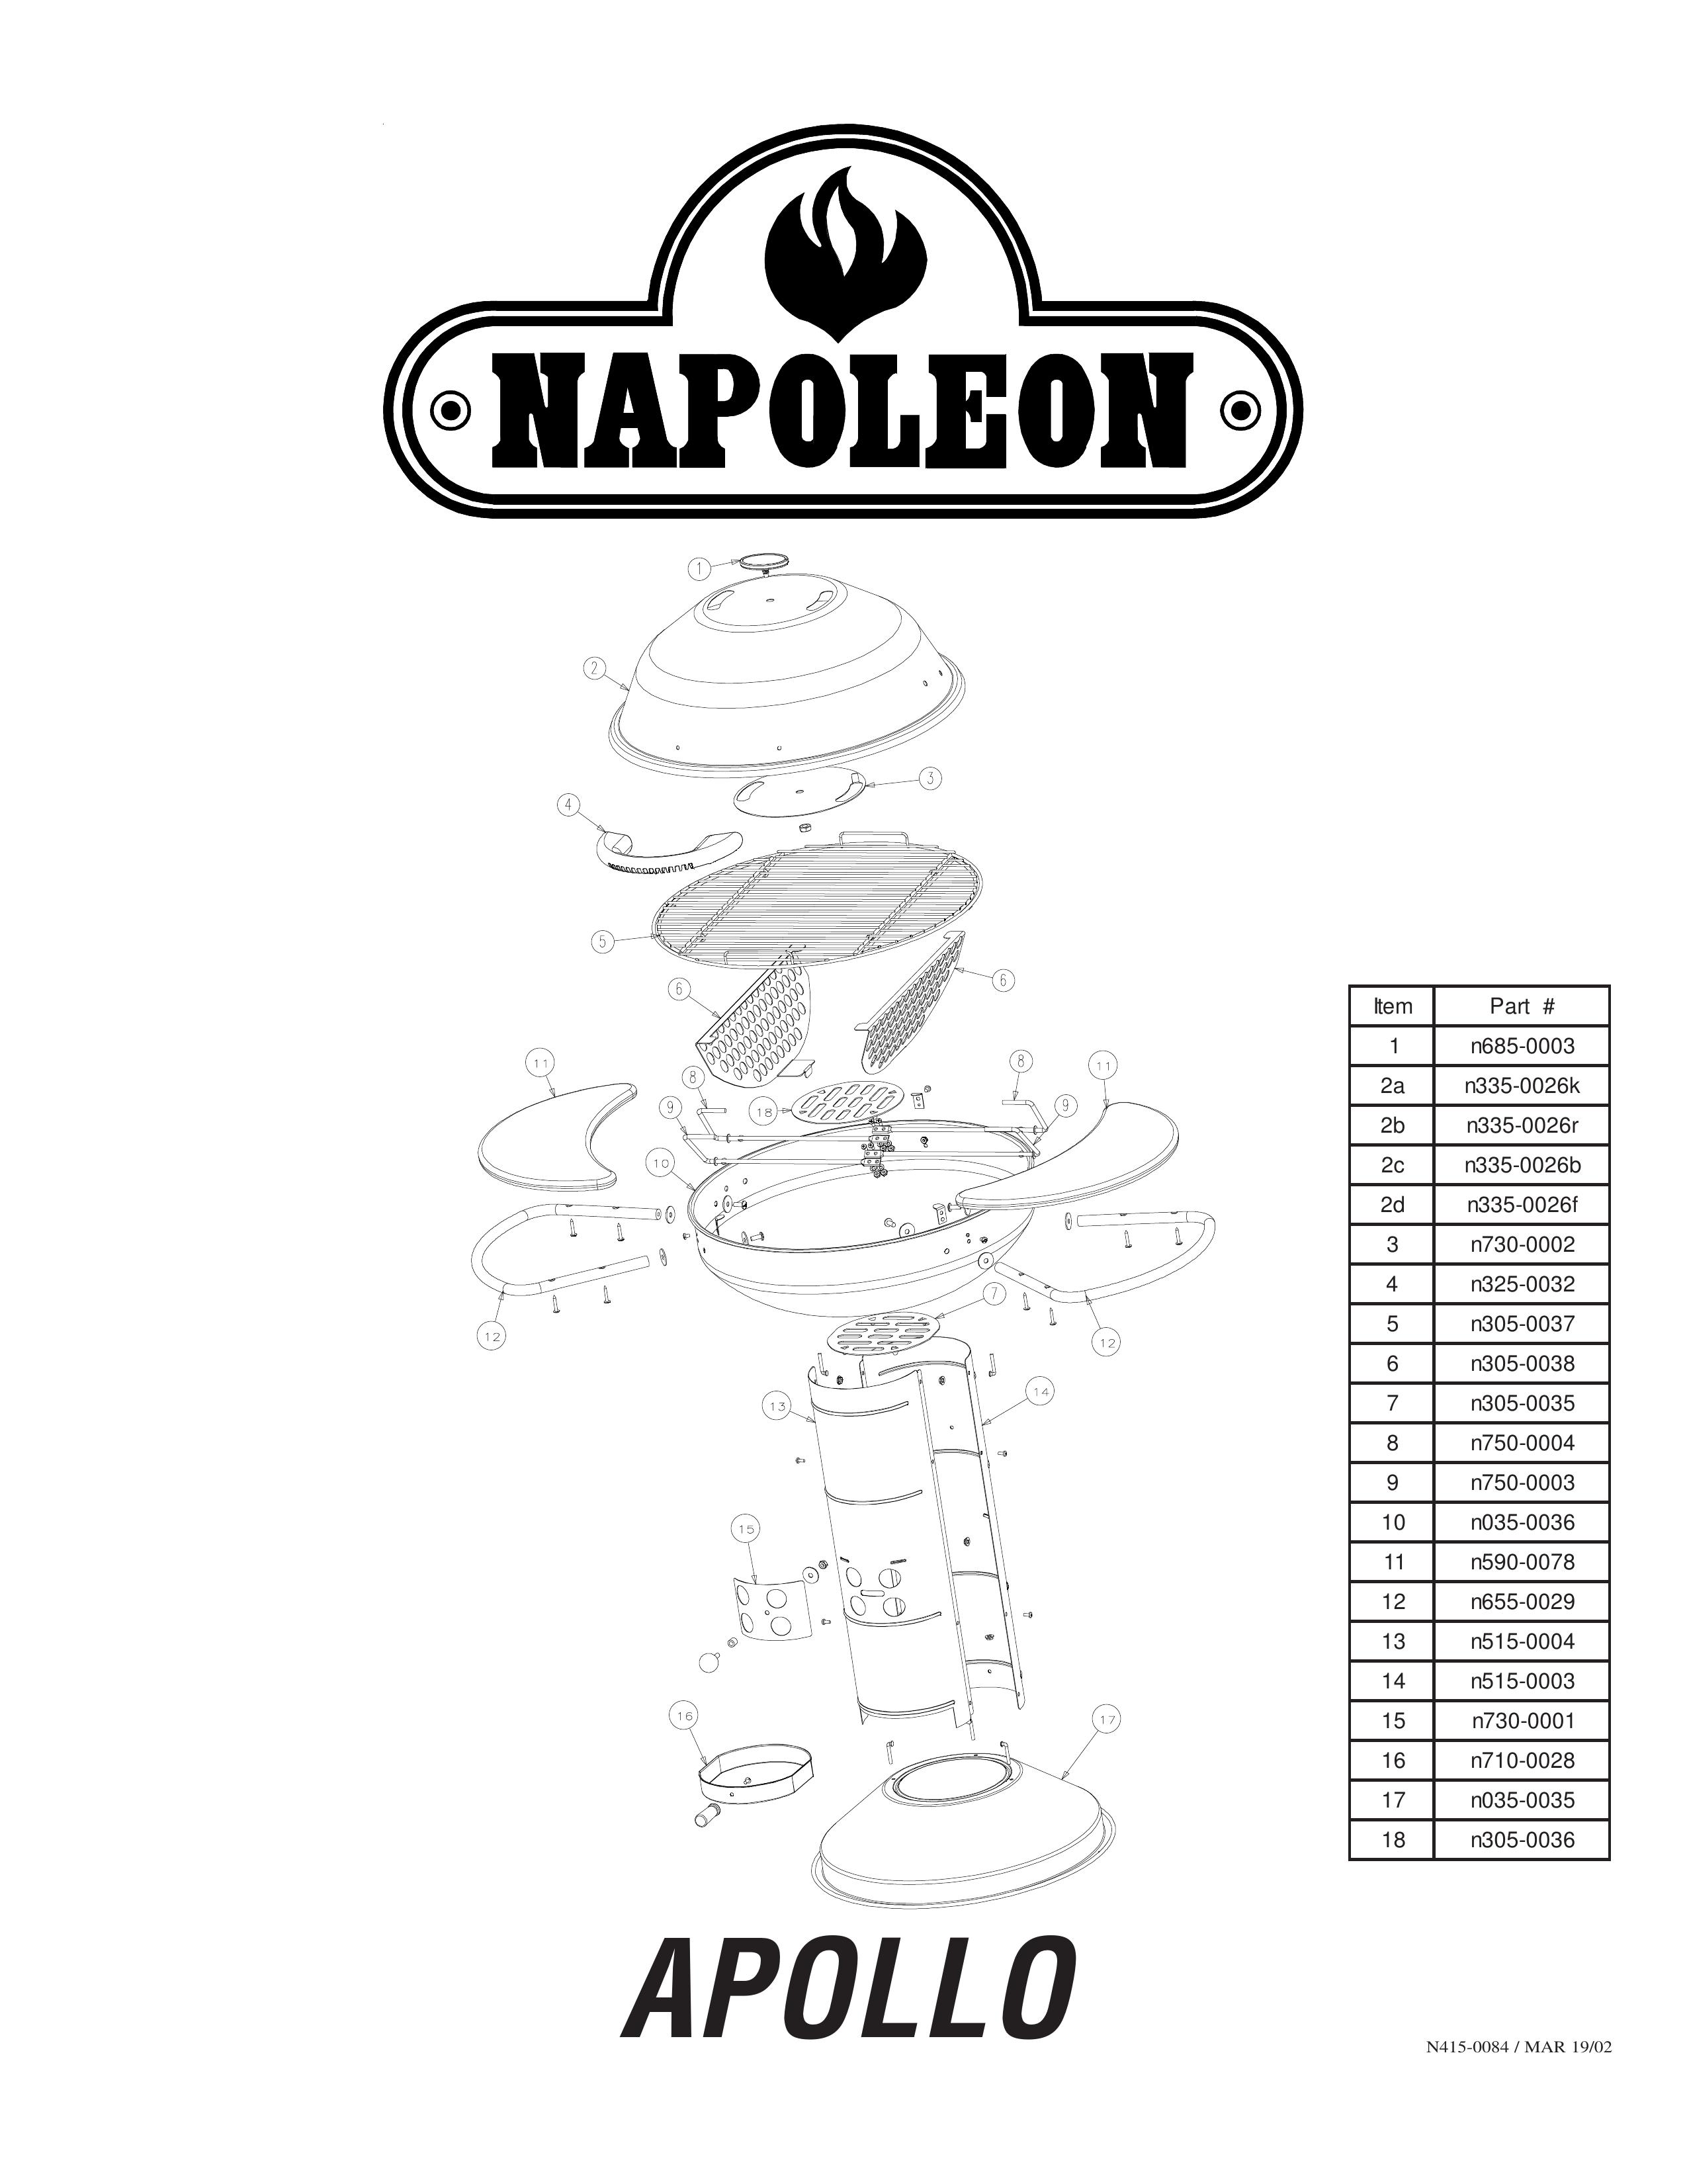 Apollo N415-0084 Charcoal Grill User Manual